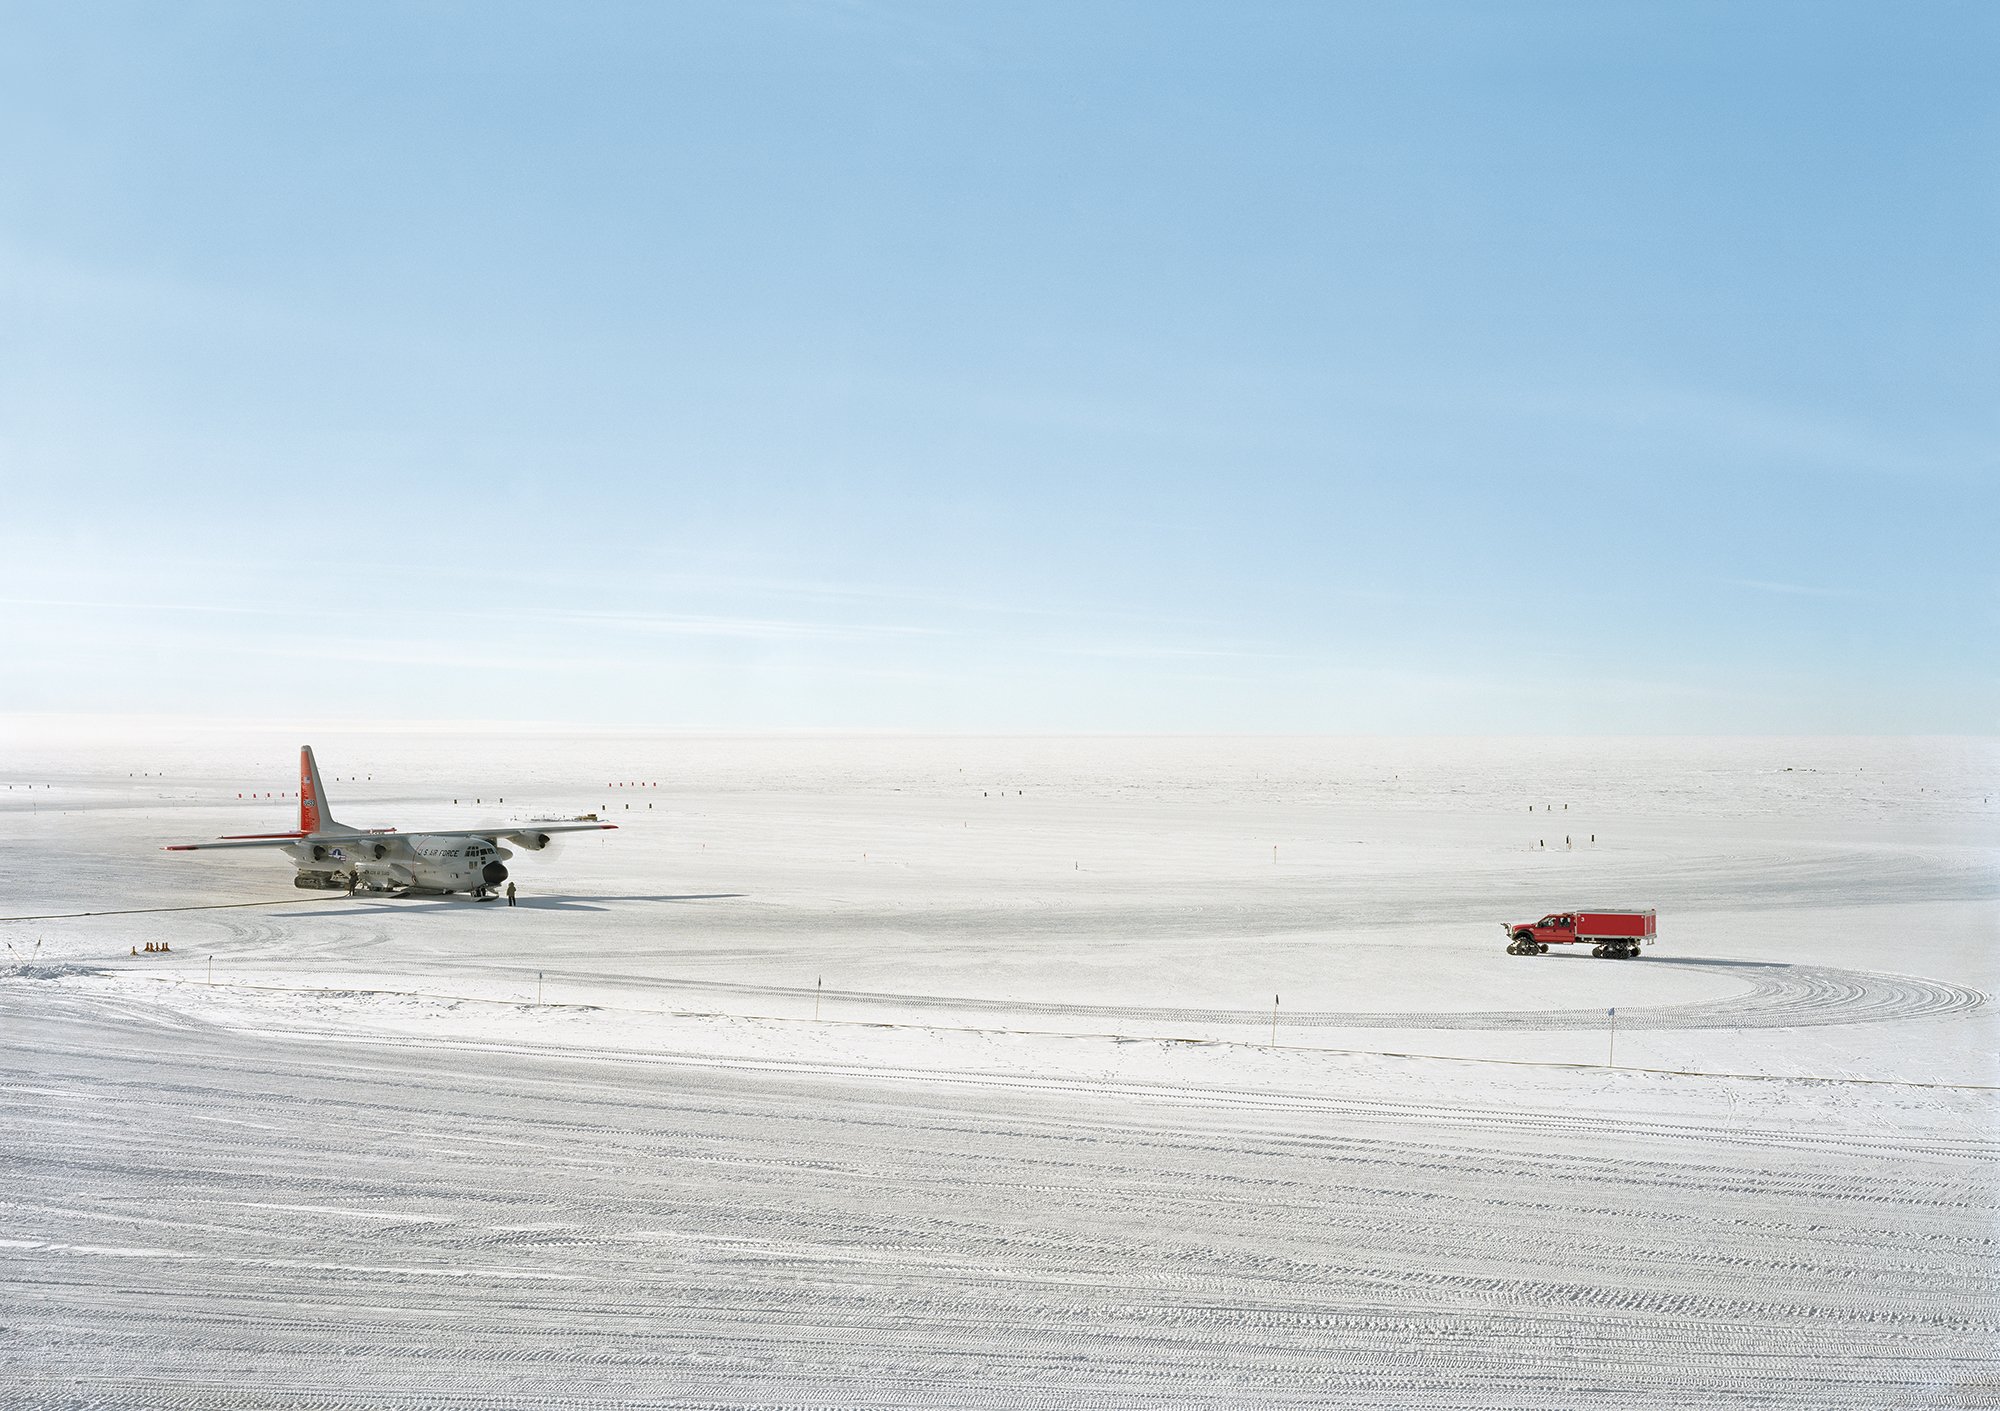 LC-130 Hercules and "Big Red," Amundsen-Scott South Pole Station, Antarctica, 2008